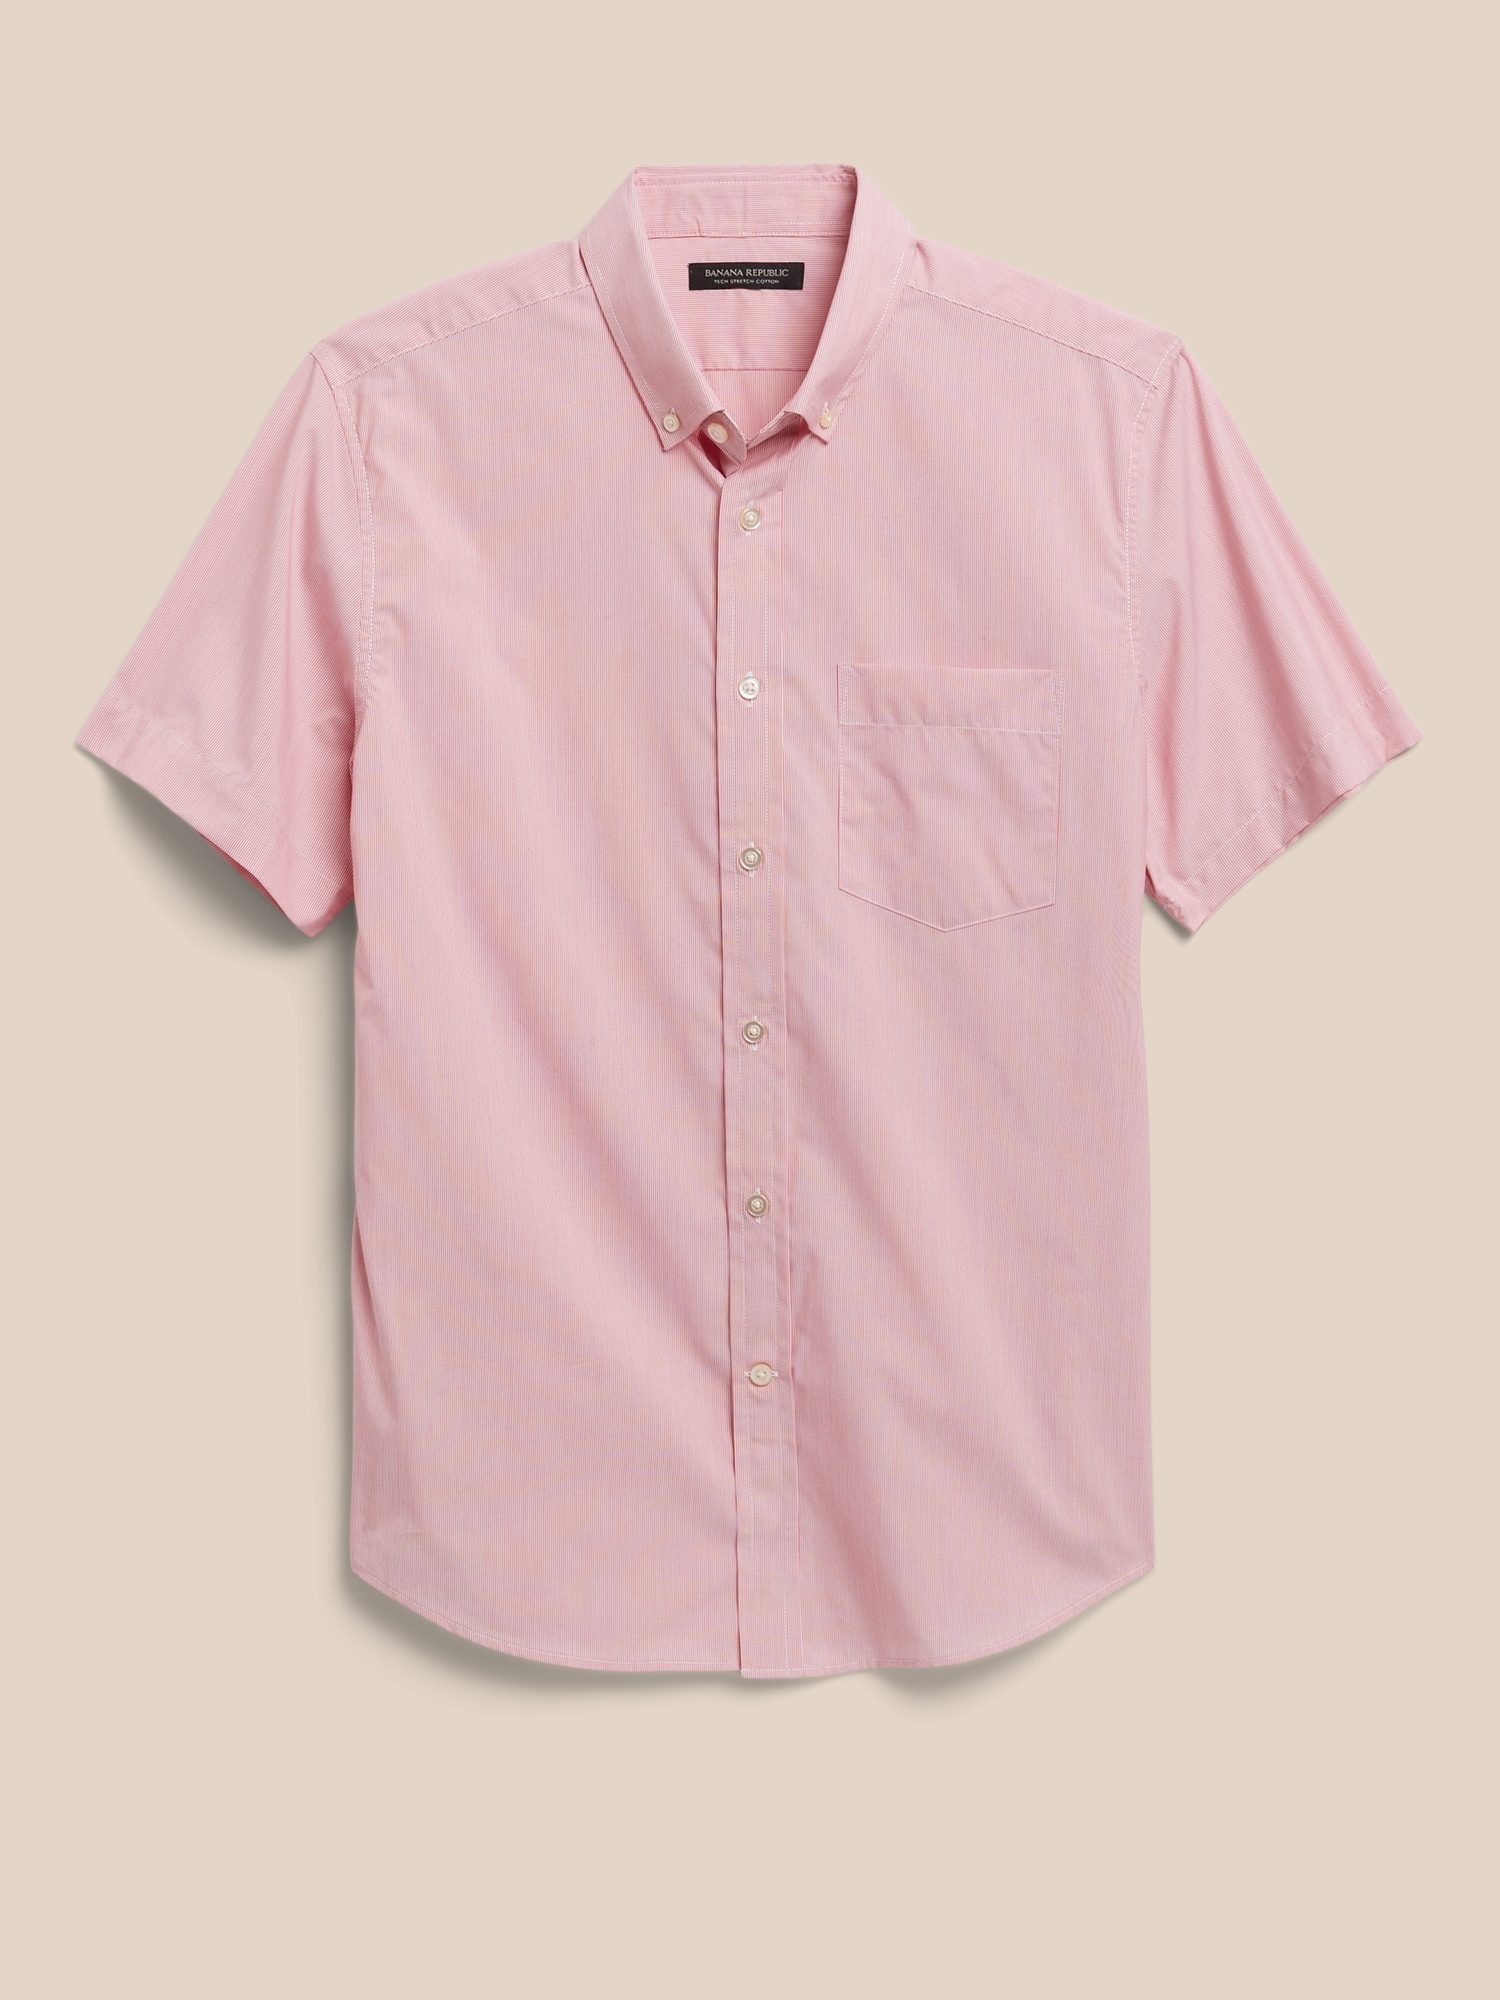 Banana Republic Small Pink Top Tshirt NEW & Leggings OS NWT